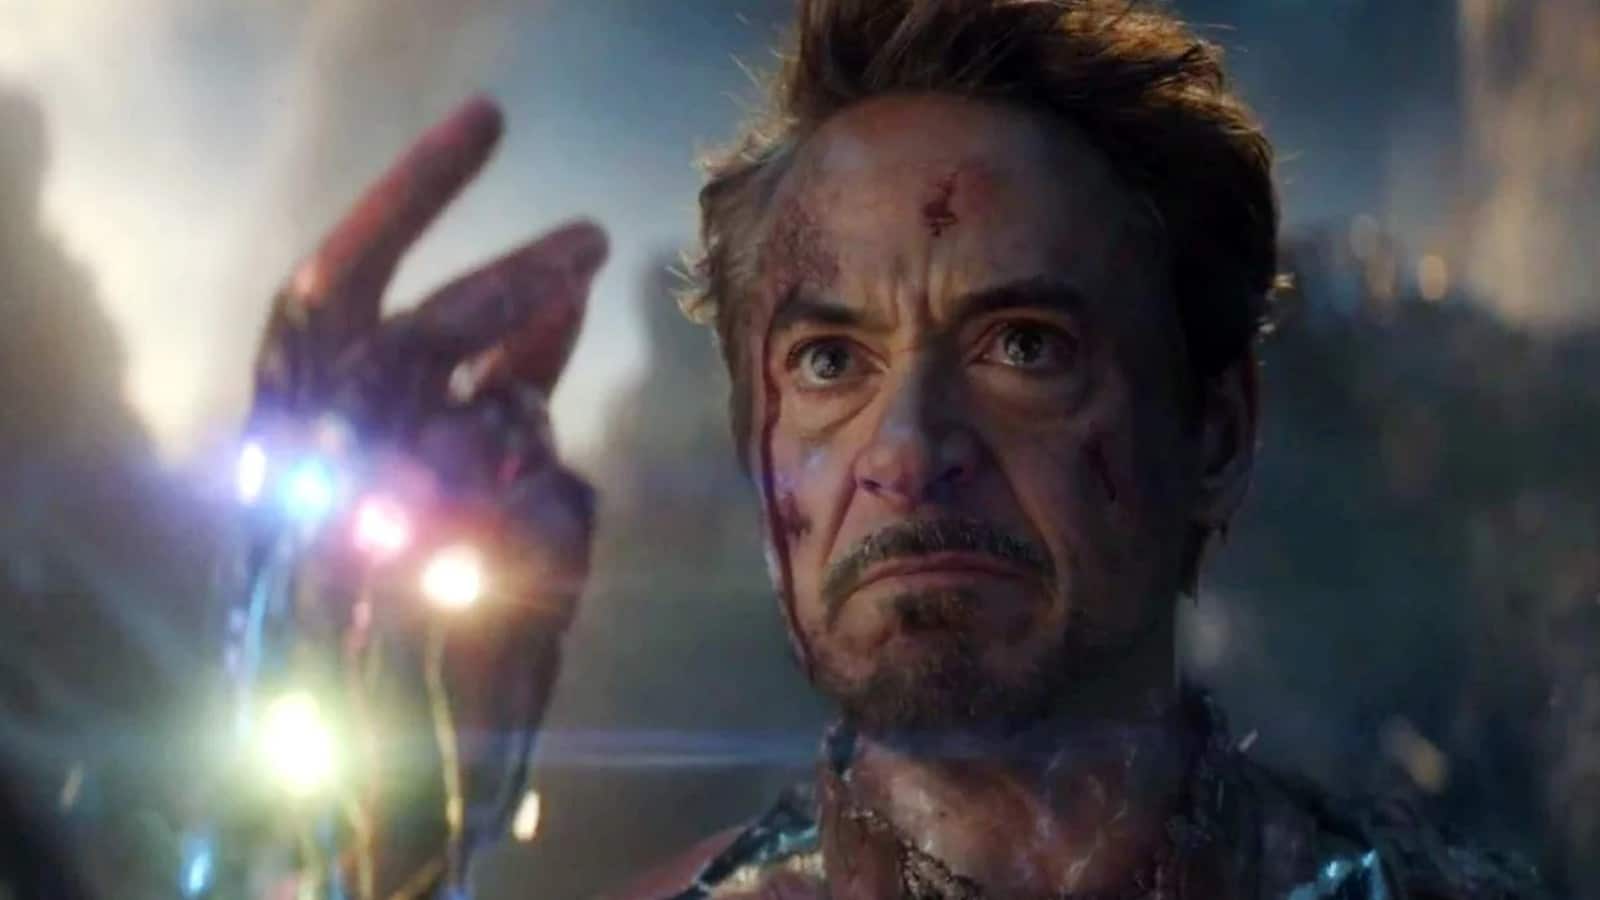 https://editors.dexerto.com/wp-content/uploads/2022/07/29/Tony-Stark-Endgame-Iron-Man.jpg